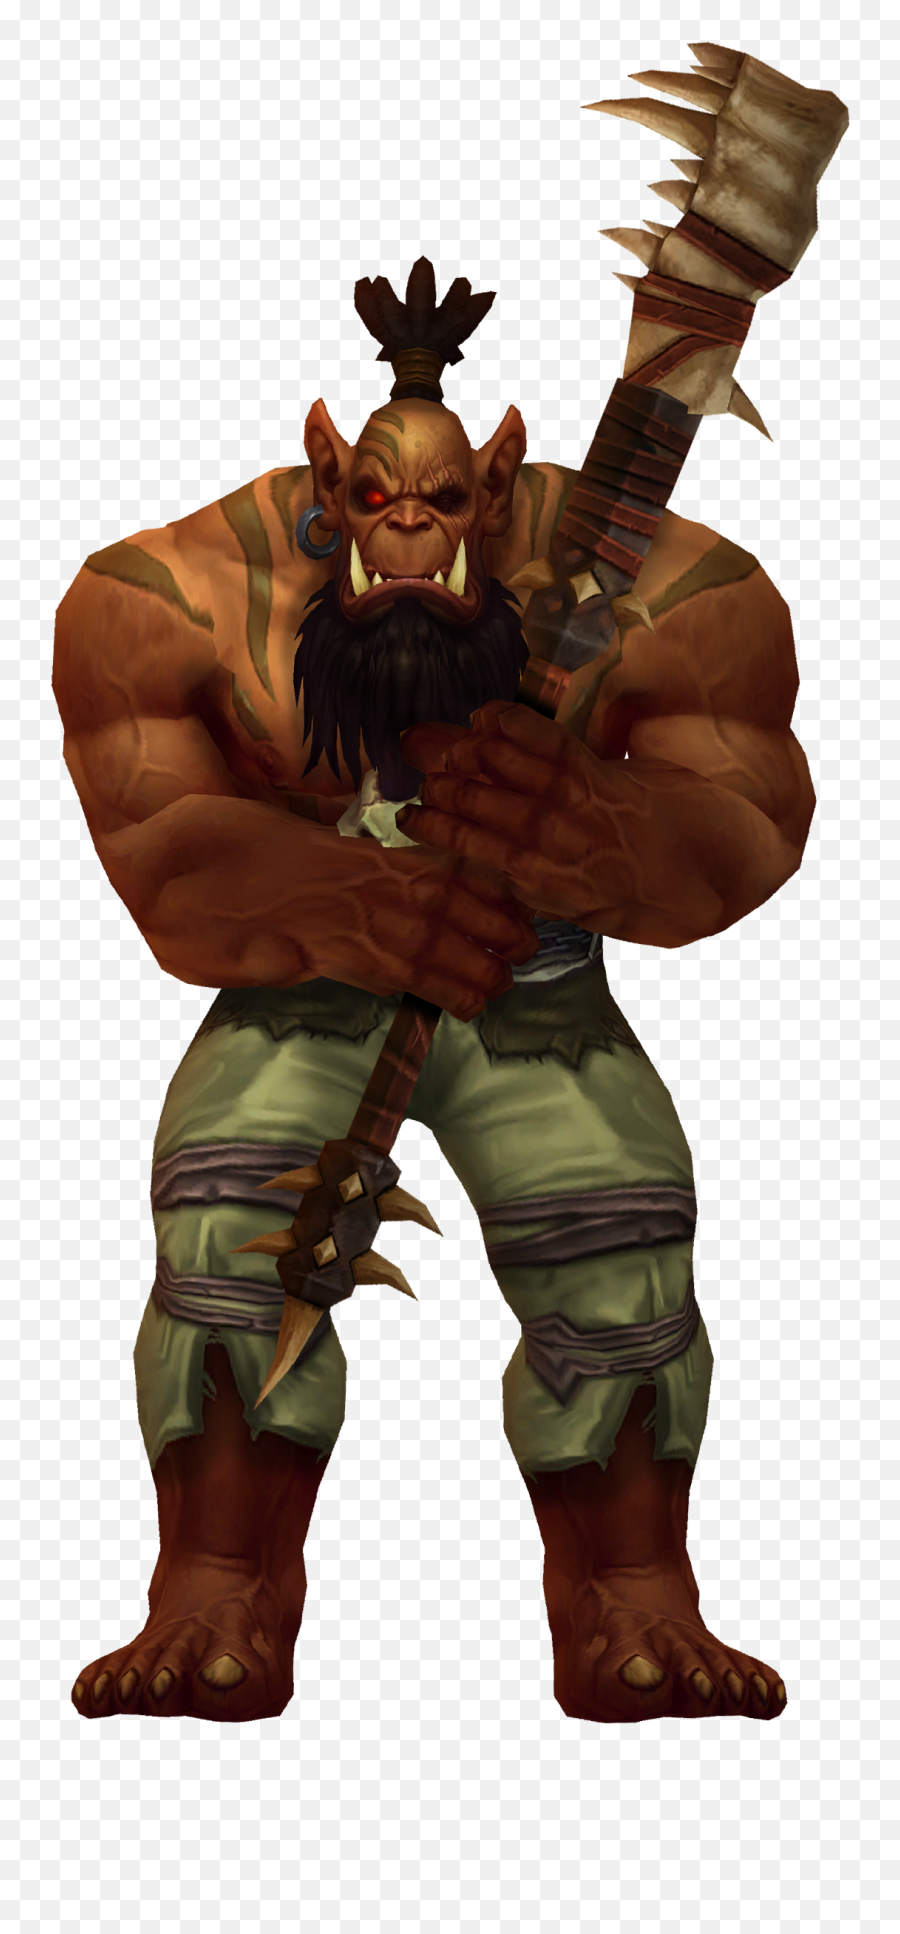 Download Orc Png Image For Free - World Of Warcraft Kilrogg Deadeye,Orc Png